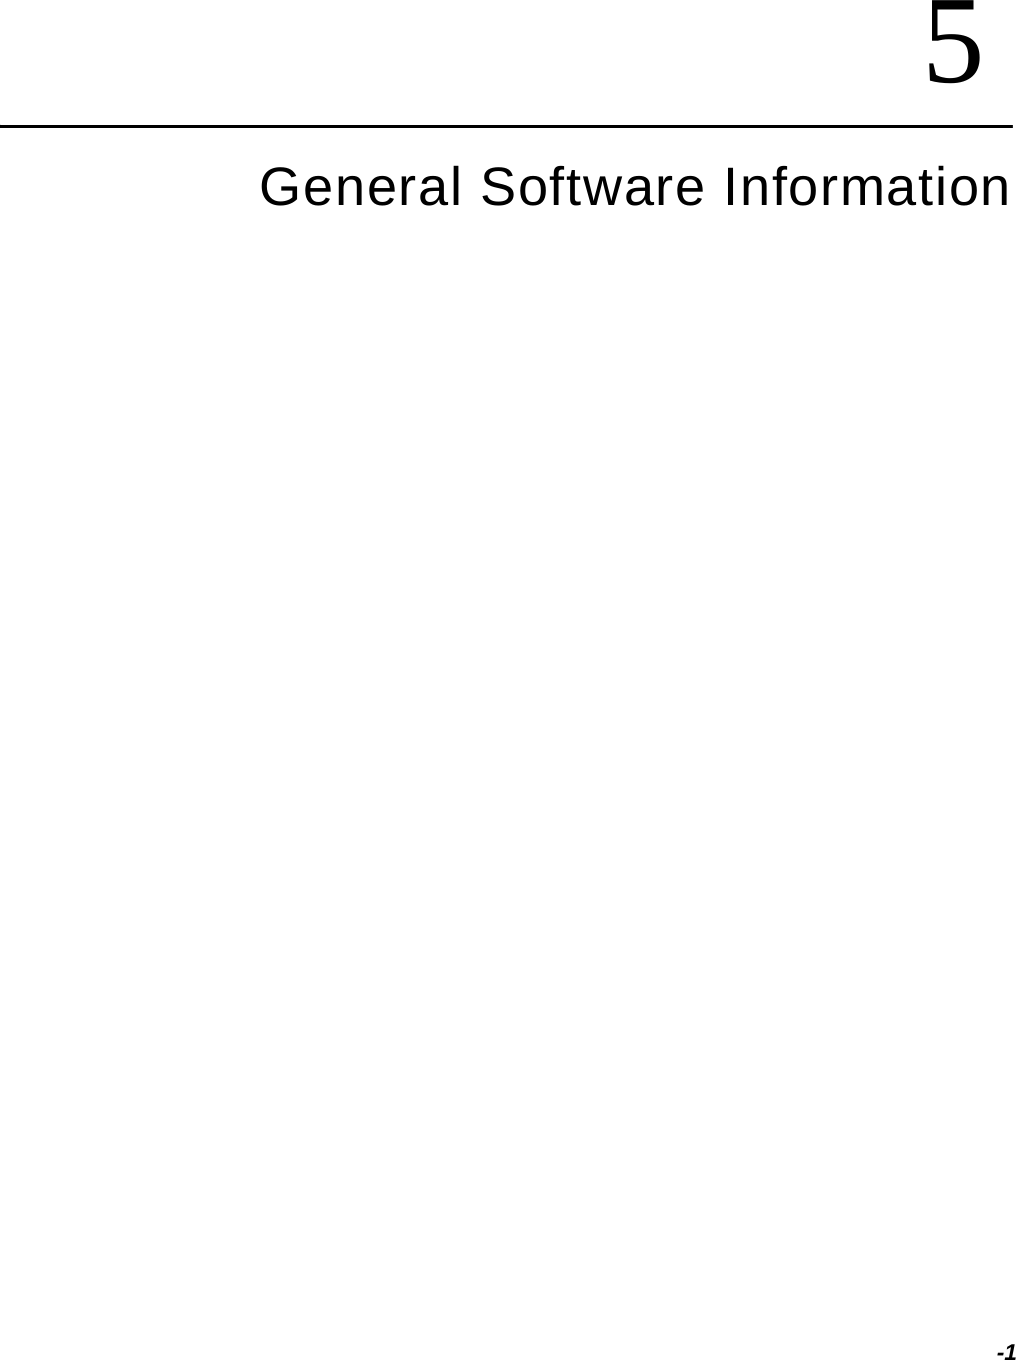 -15General Software Information